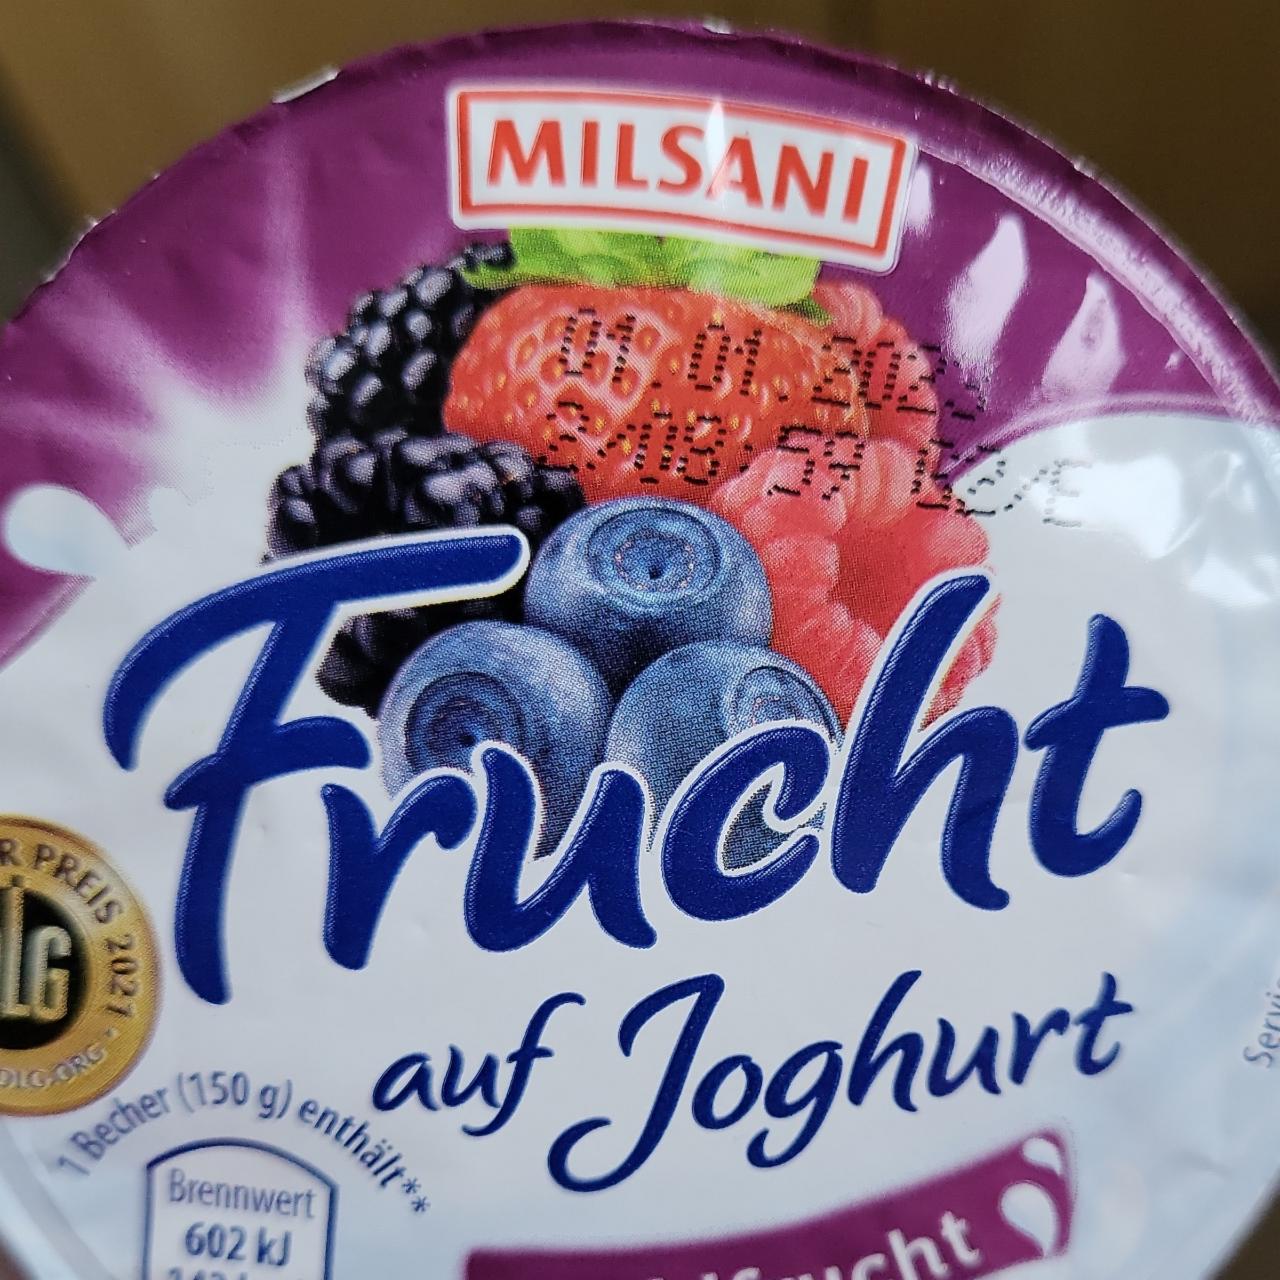 Фото - Йогурт Frucht auf Joghurt Waldfrucht Milsani